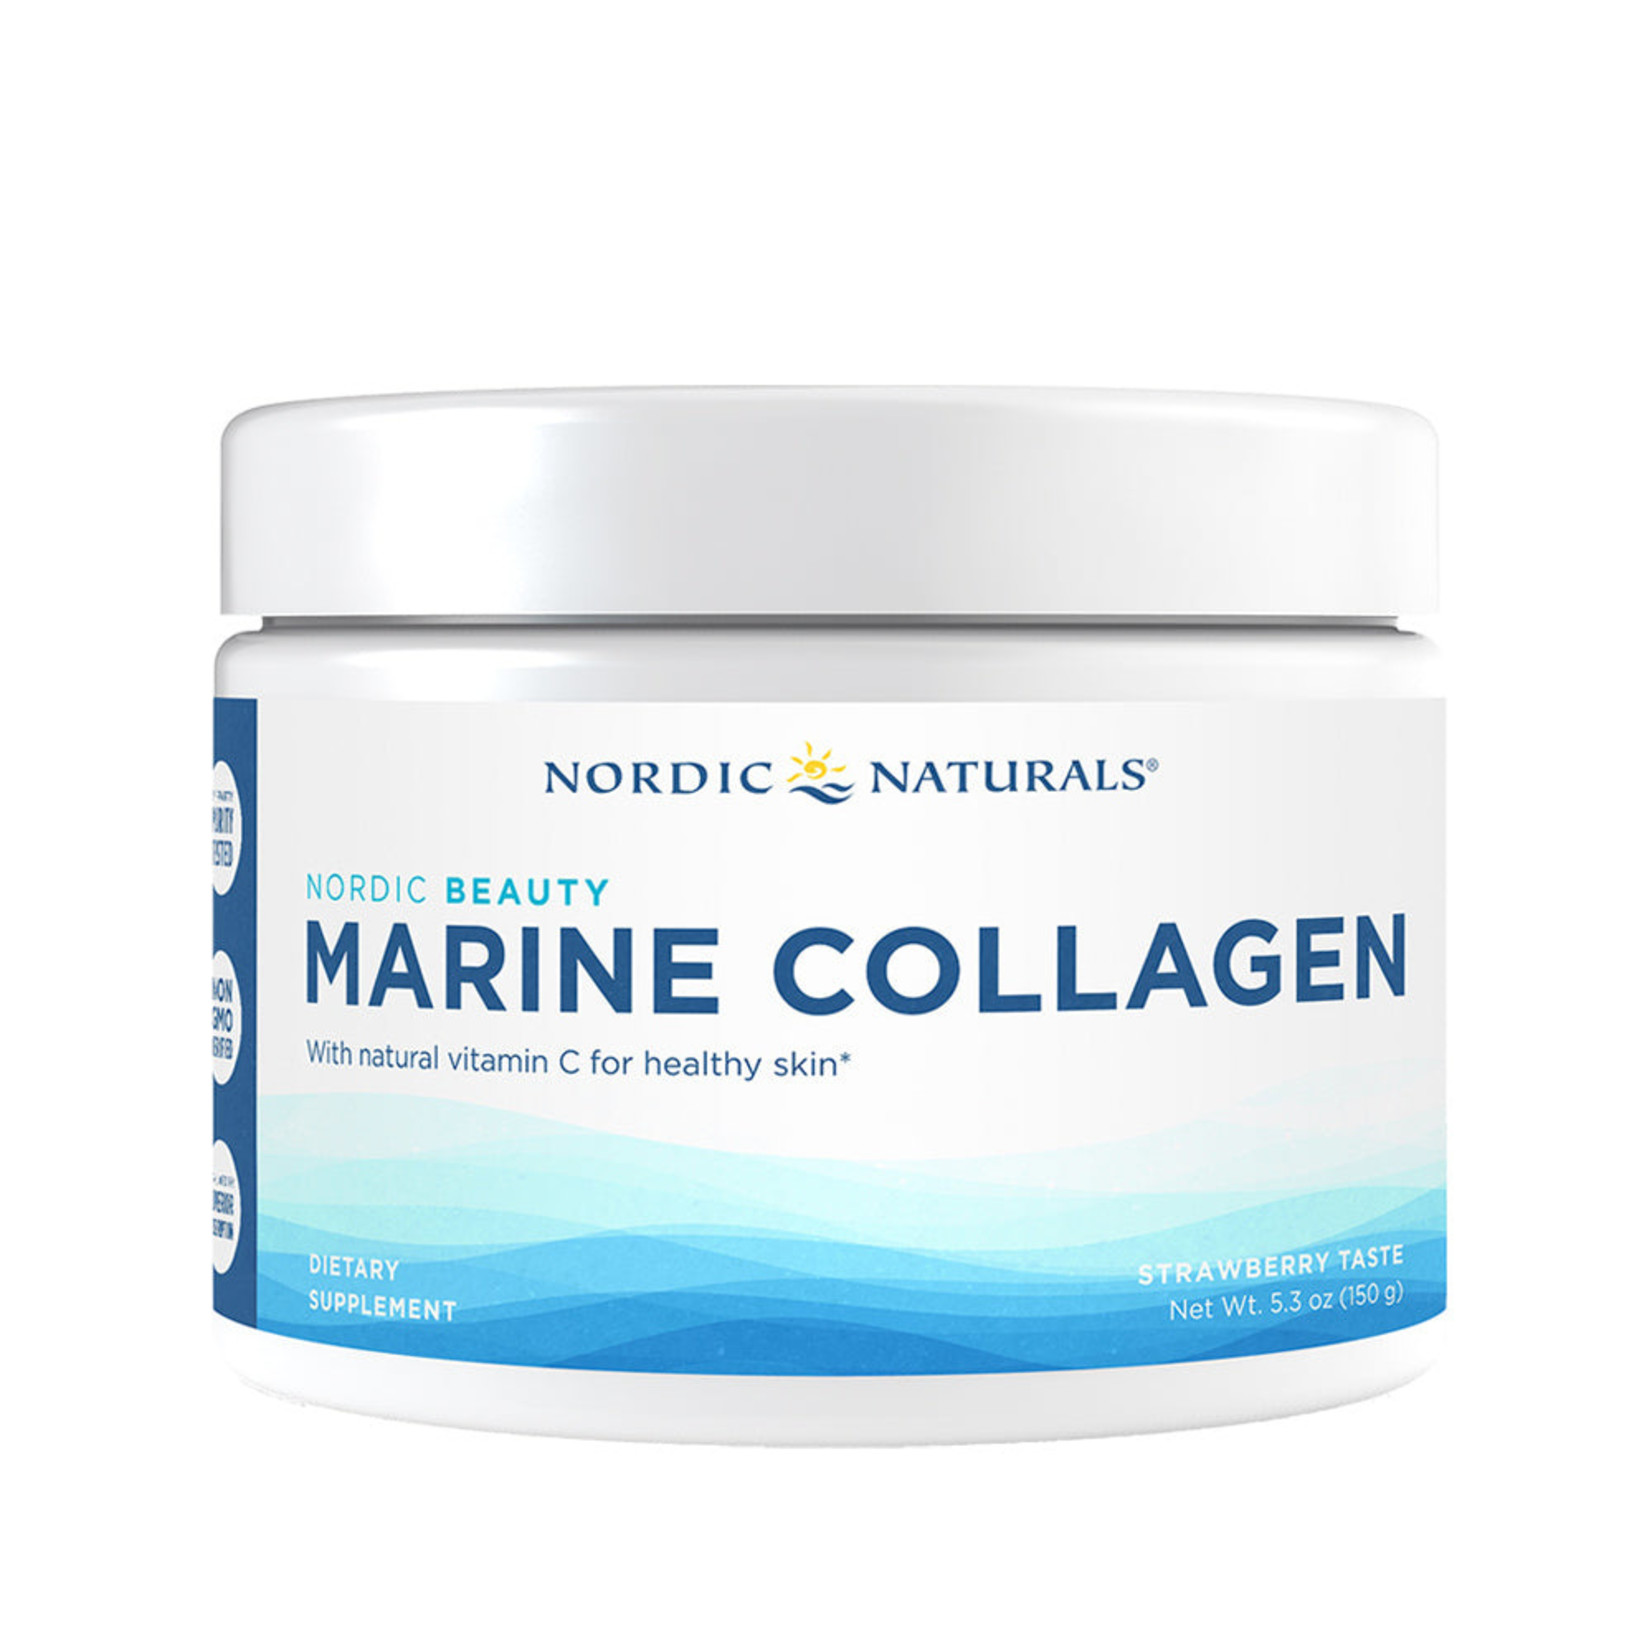 Nordic Naturals Nordic Naturals - Marine Collagen - 5.29 oz